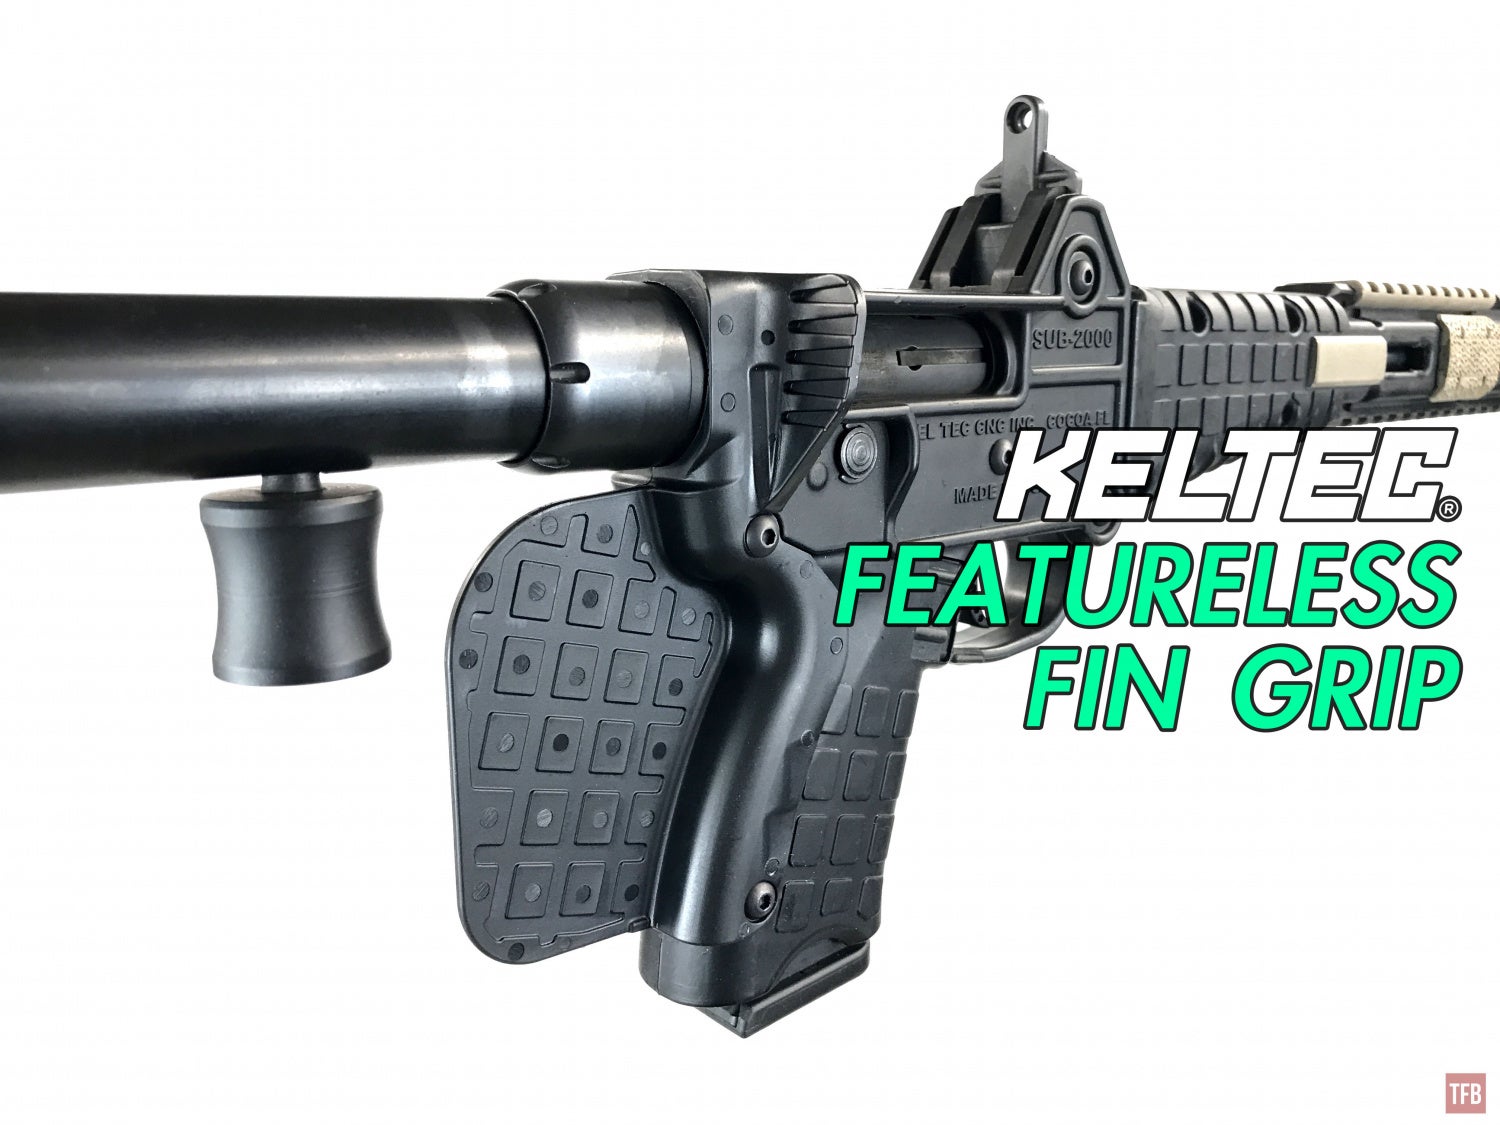 Tfb Review Kel Tec Sub00 Featureless Fin Grip Kit The Firearm Blog